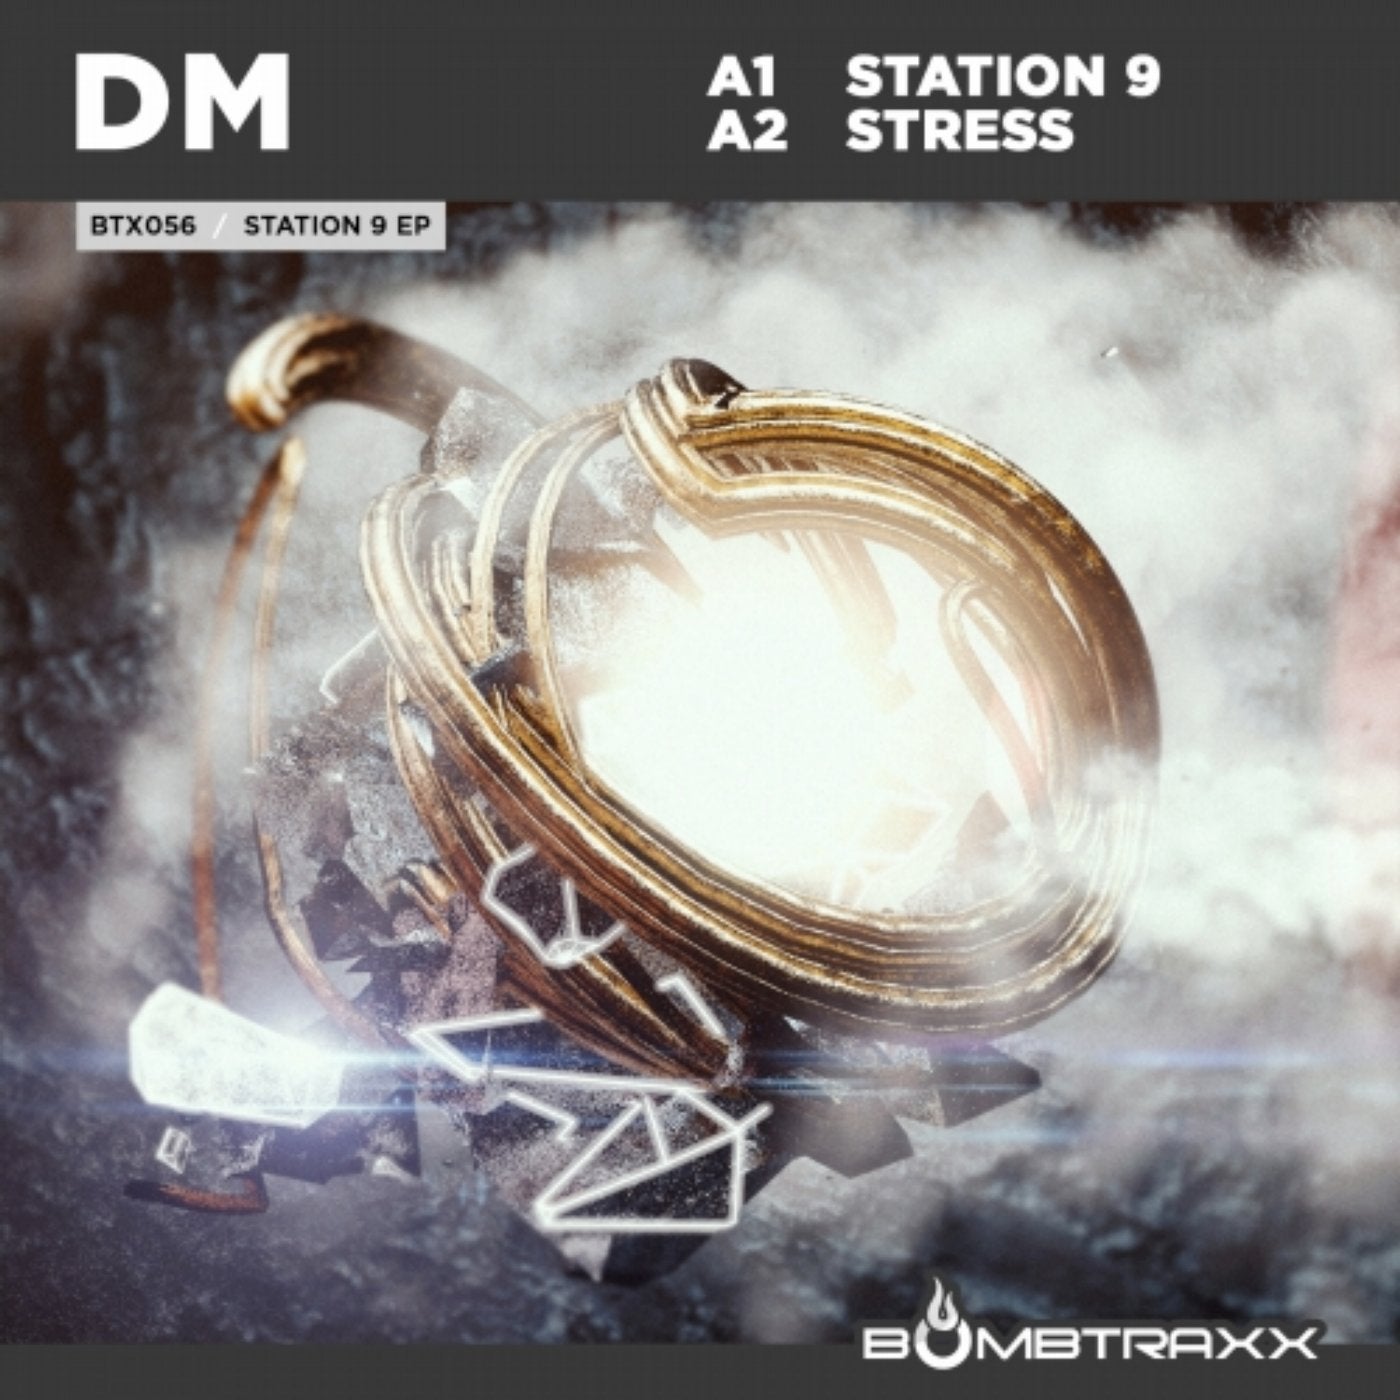 Station 9 EP